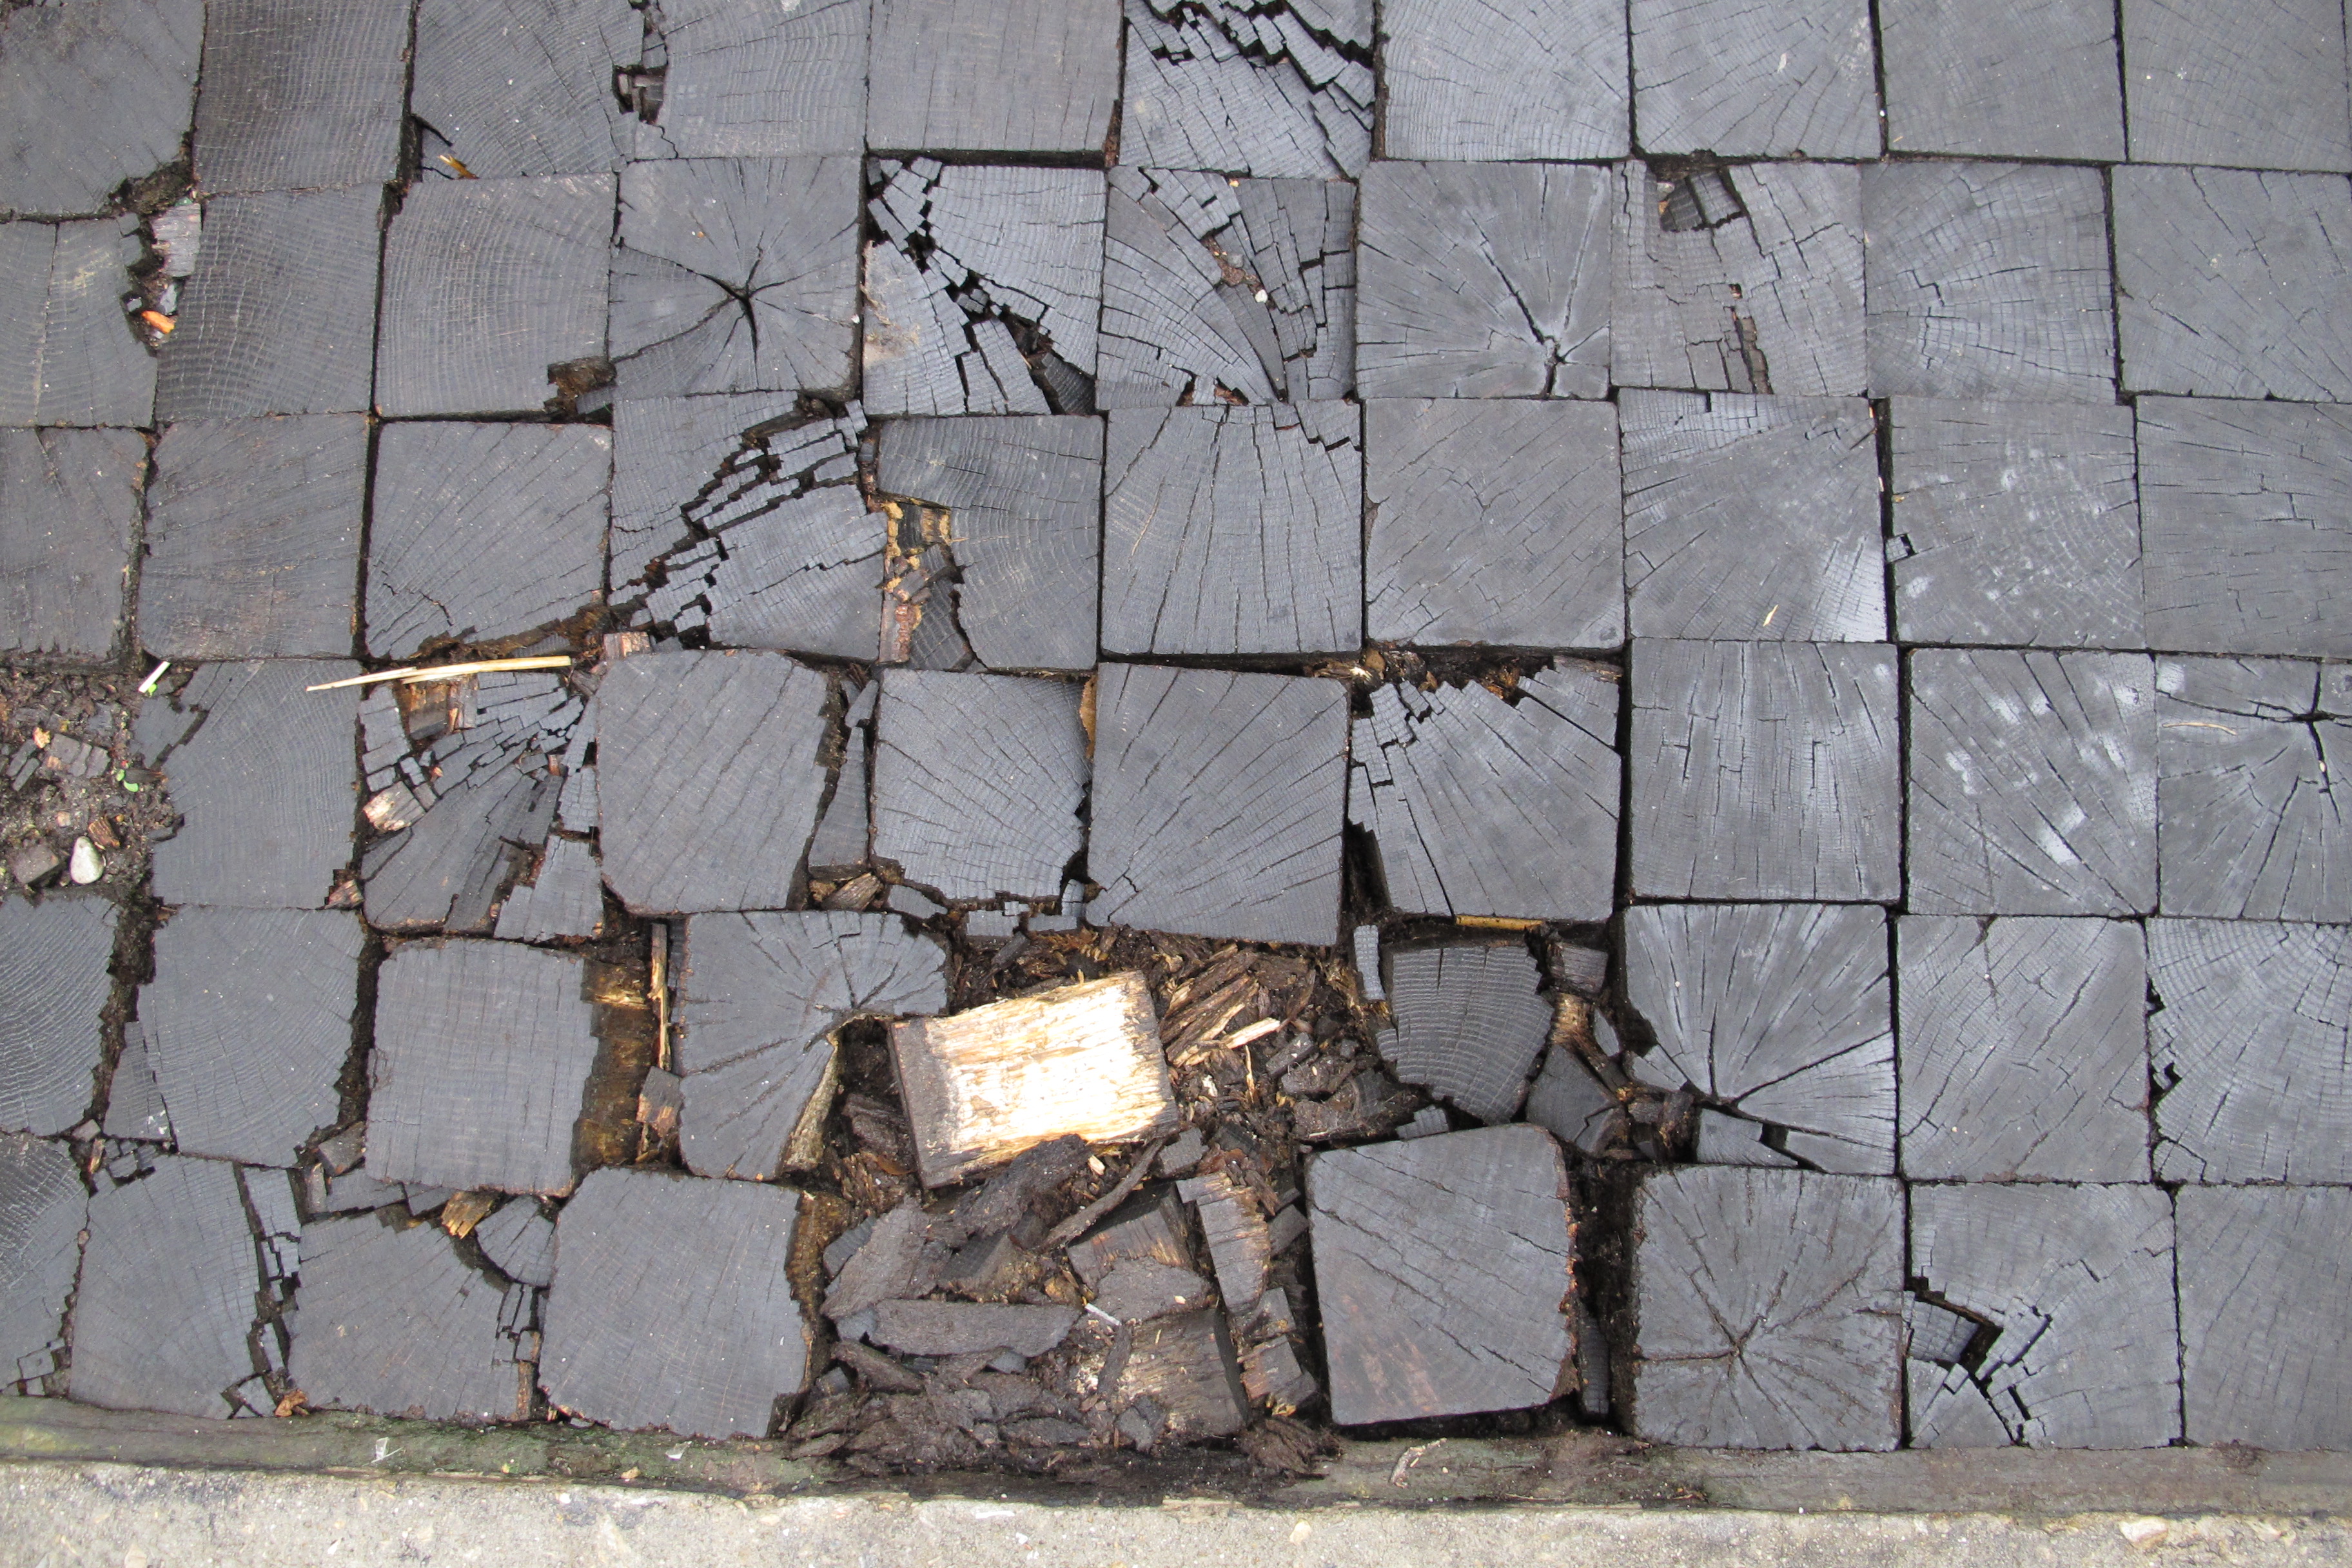 Camac Street's oak block pavers were getting chewed up. (October 9, 2012)